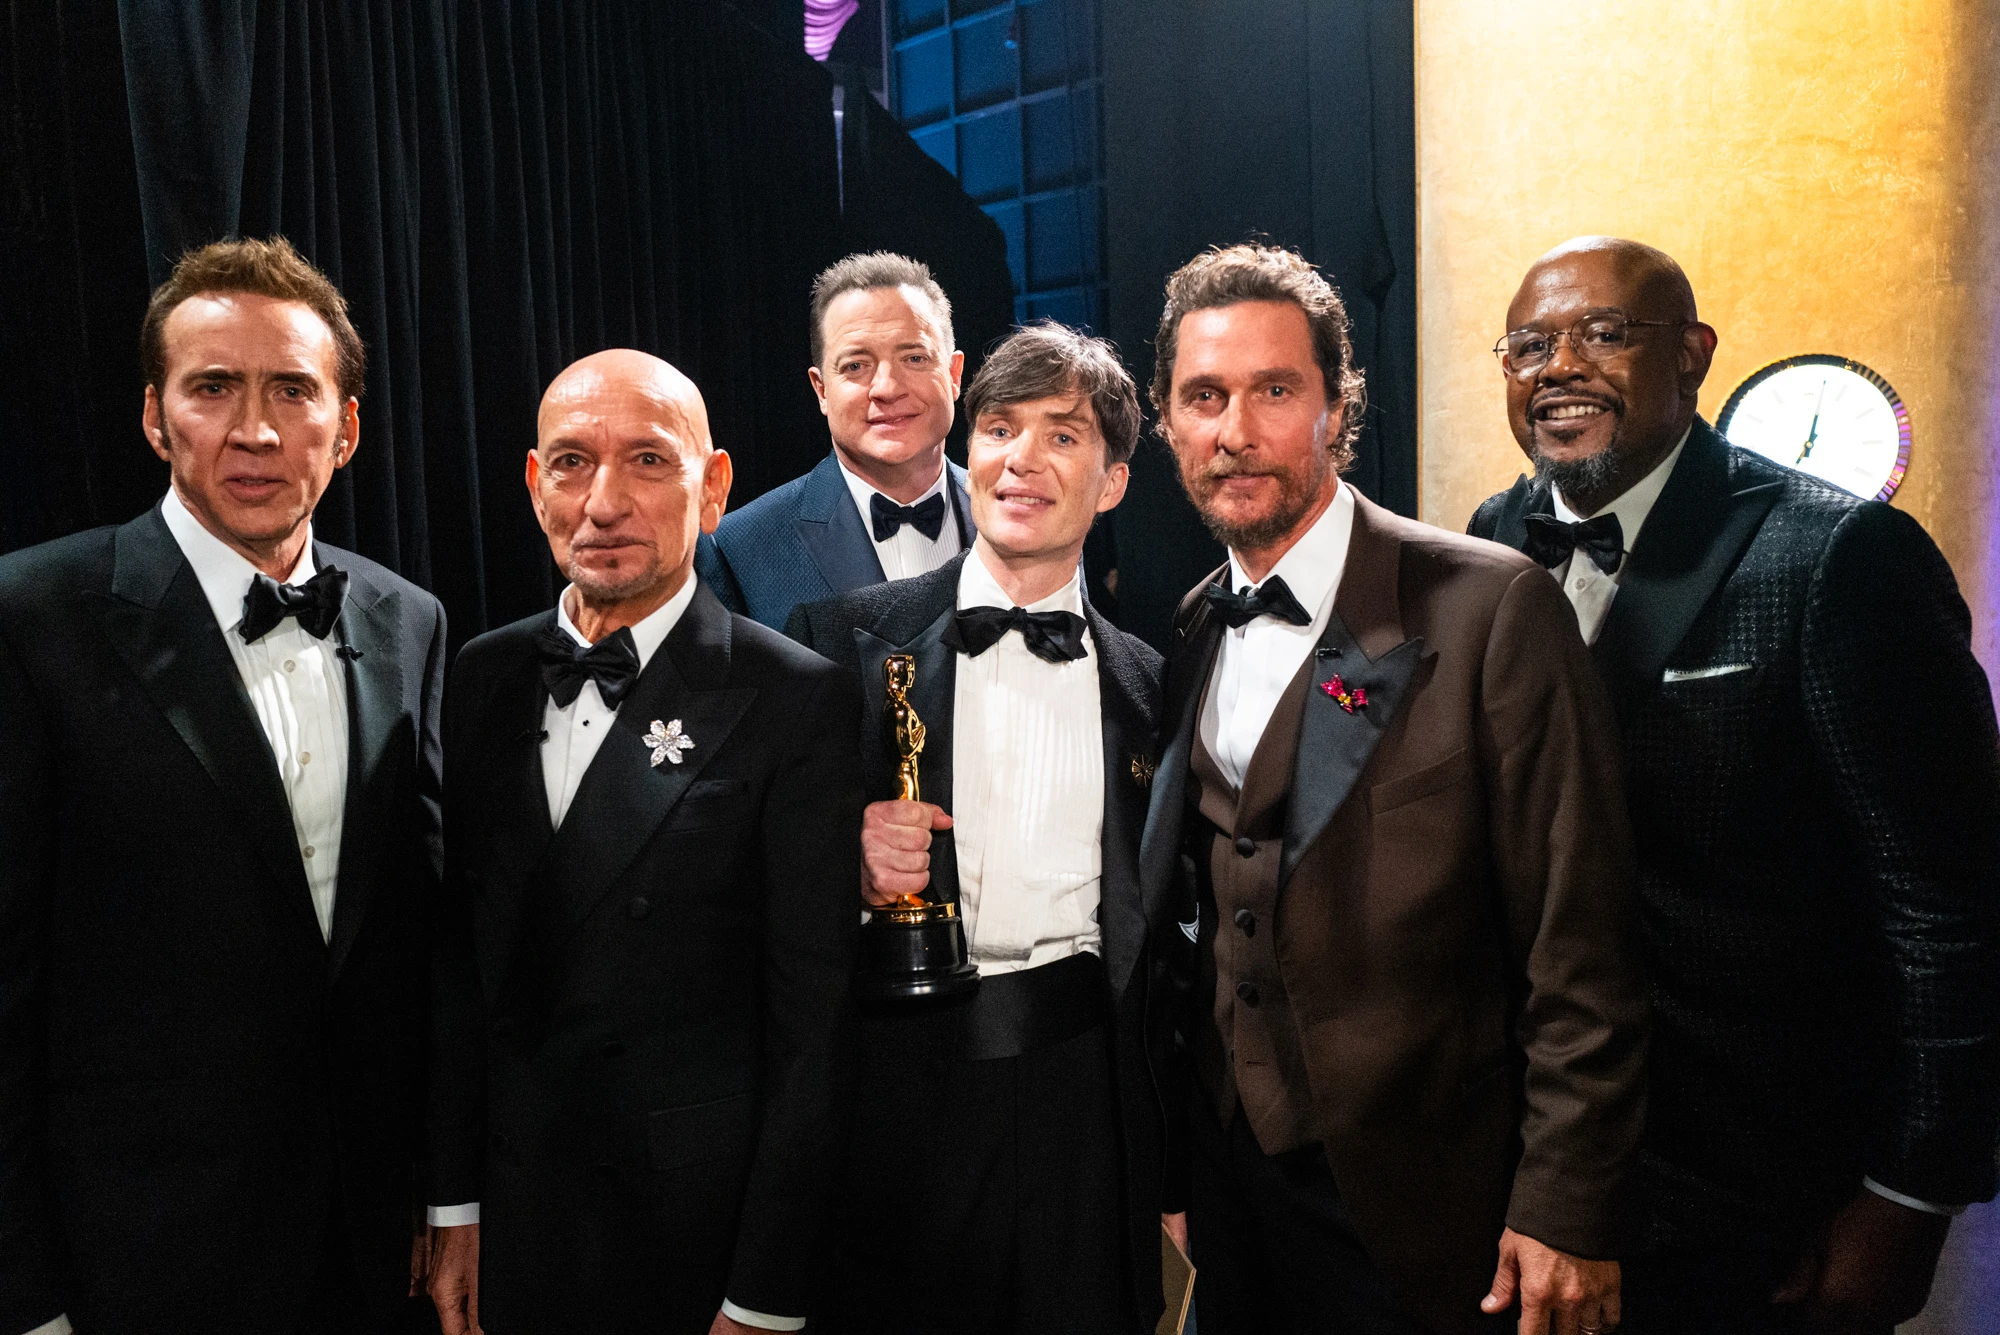 Nicolas Cage, Ben Kingsley, Brendan Fraser, Cillian Murphy, Matthew McConaughey and Forest Whitaker